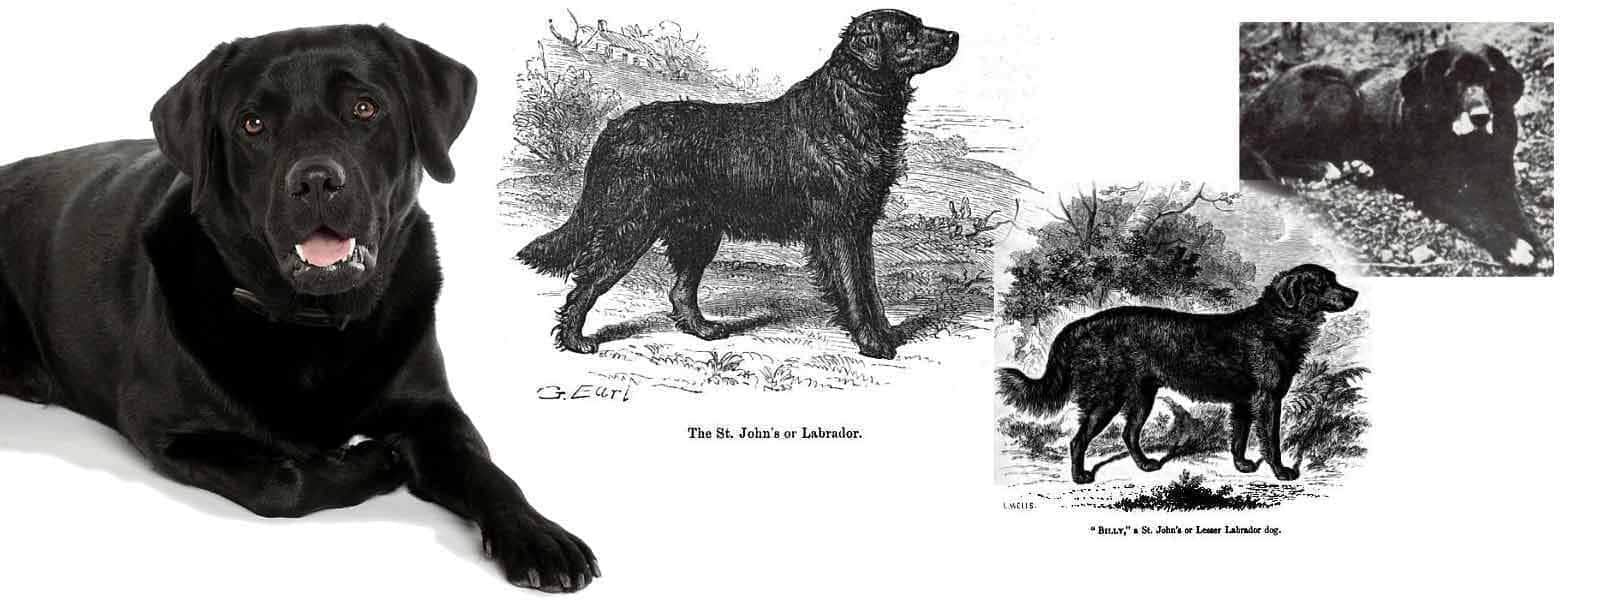 where did black dog originated